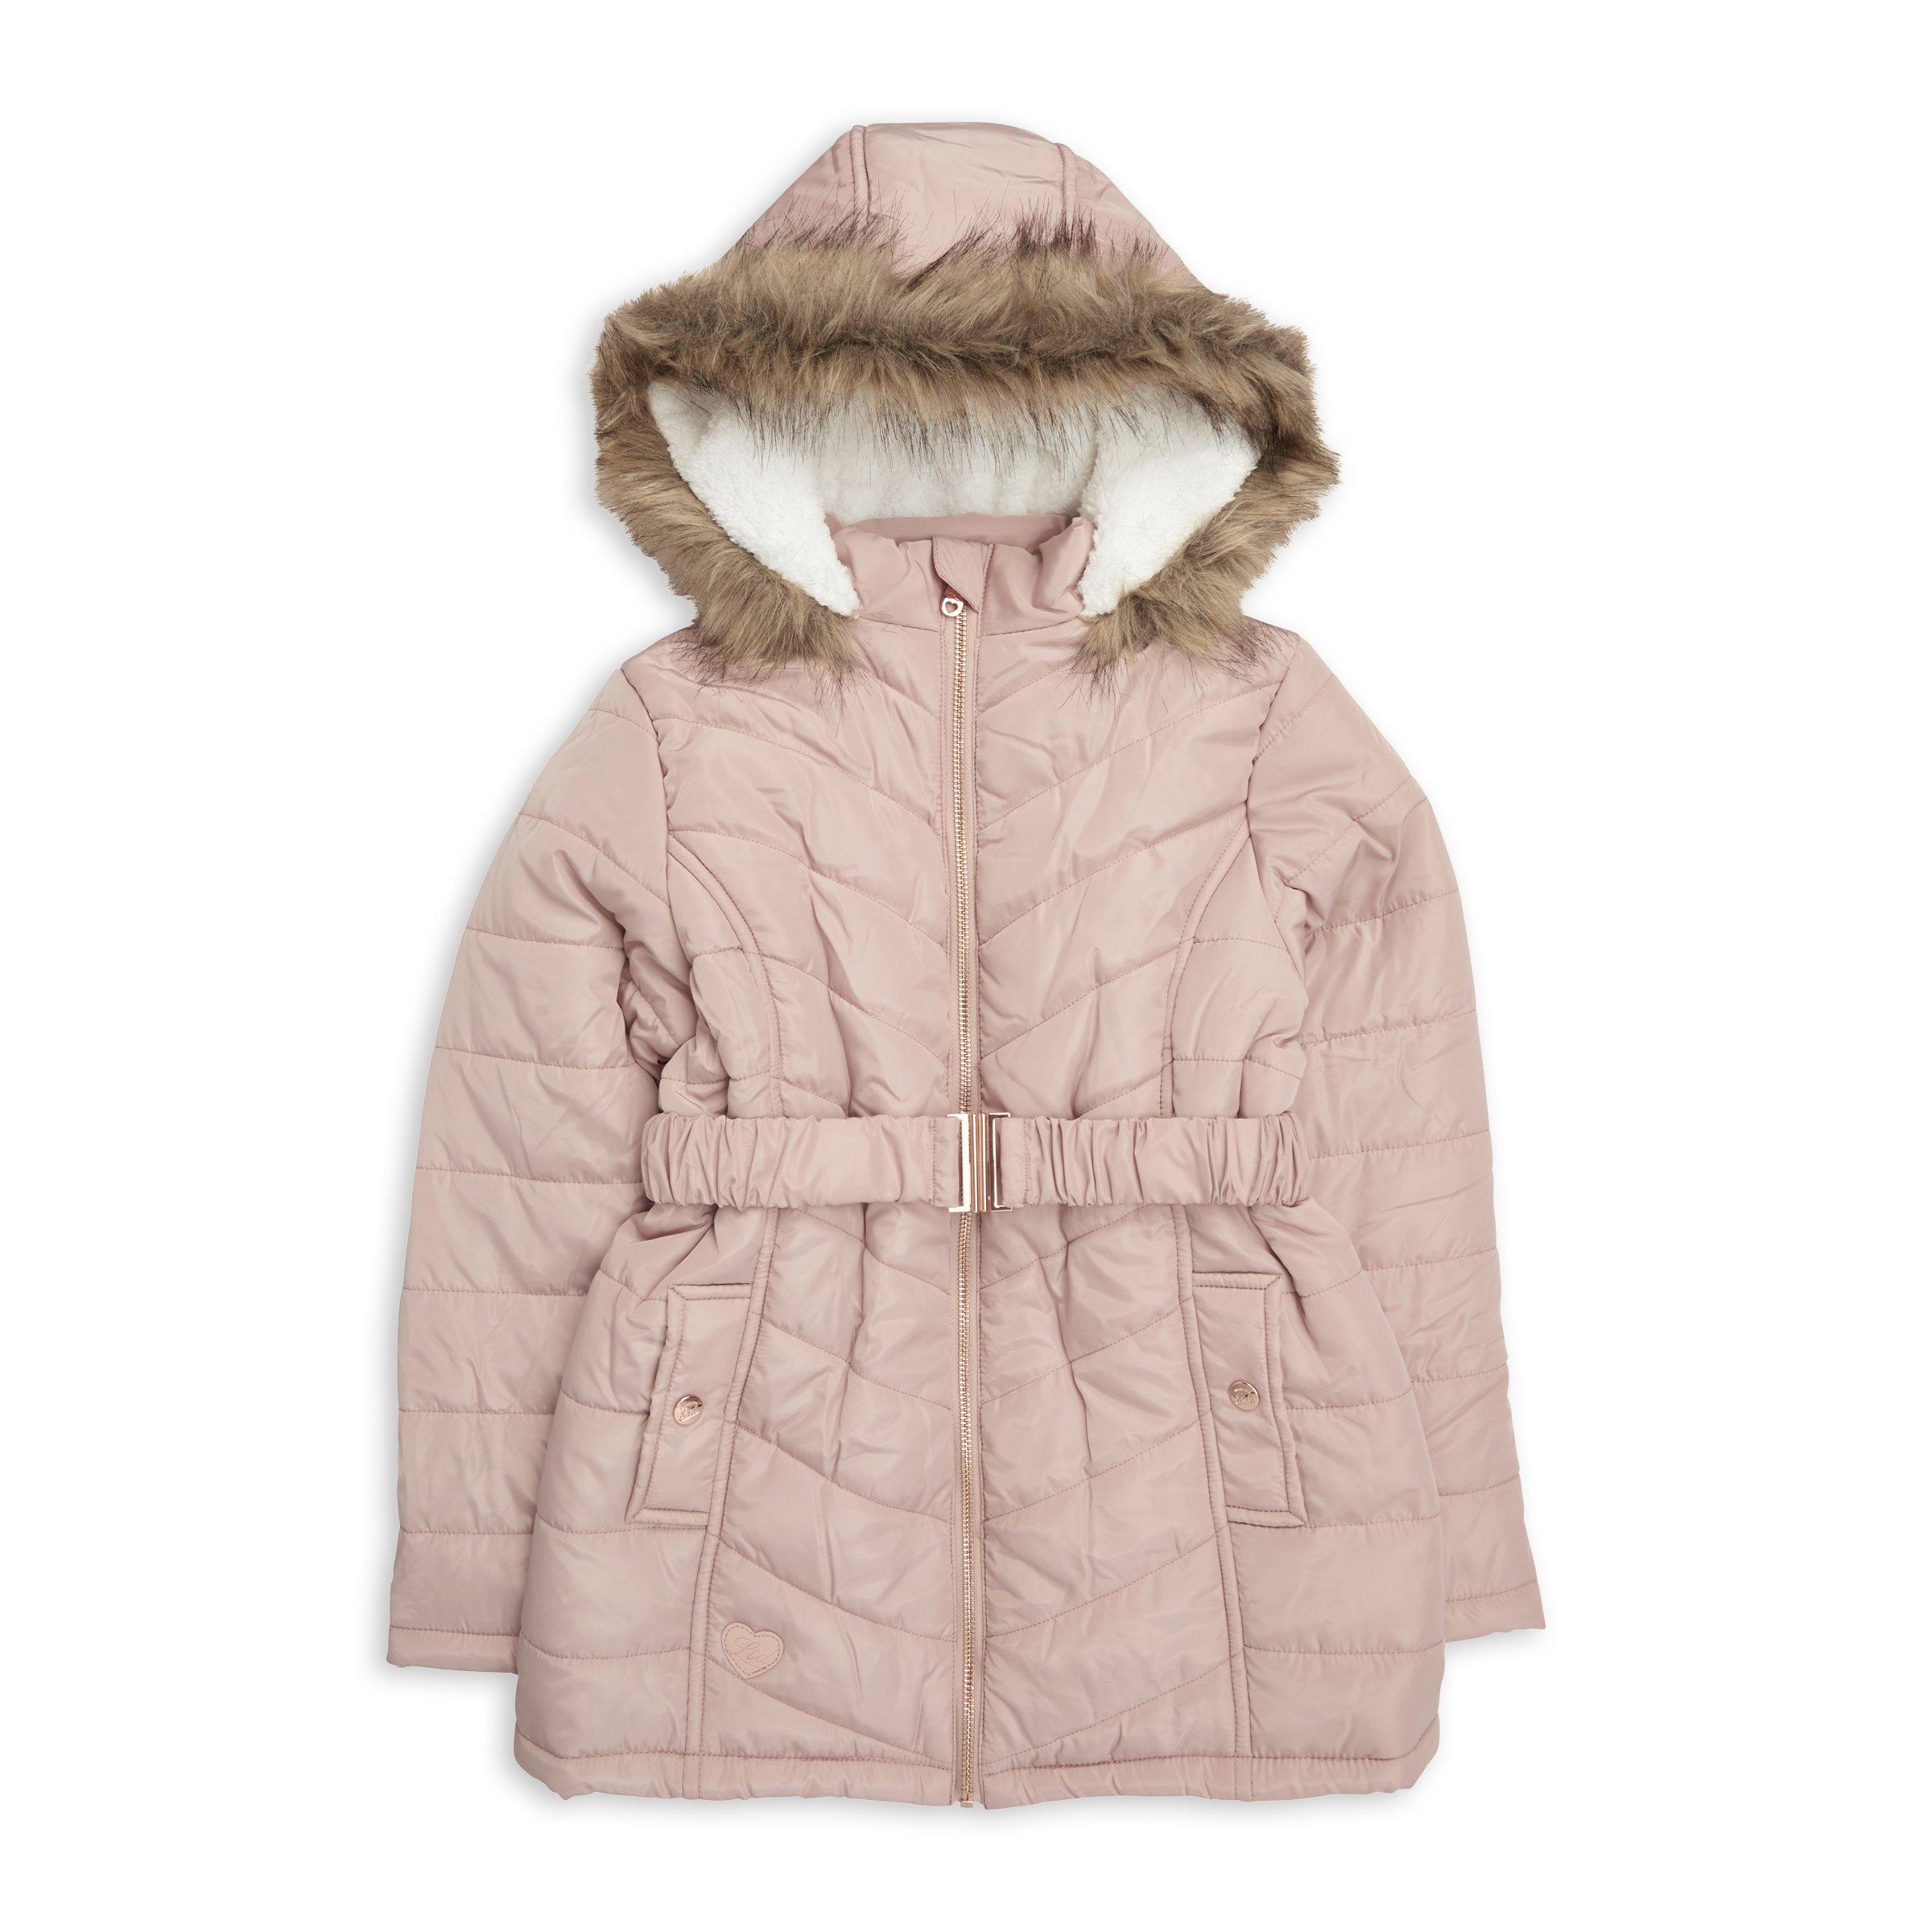 Buy LTD Kids Girls Puffer Jacket Online | Truworths